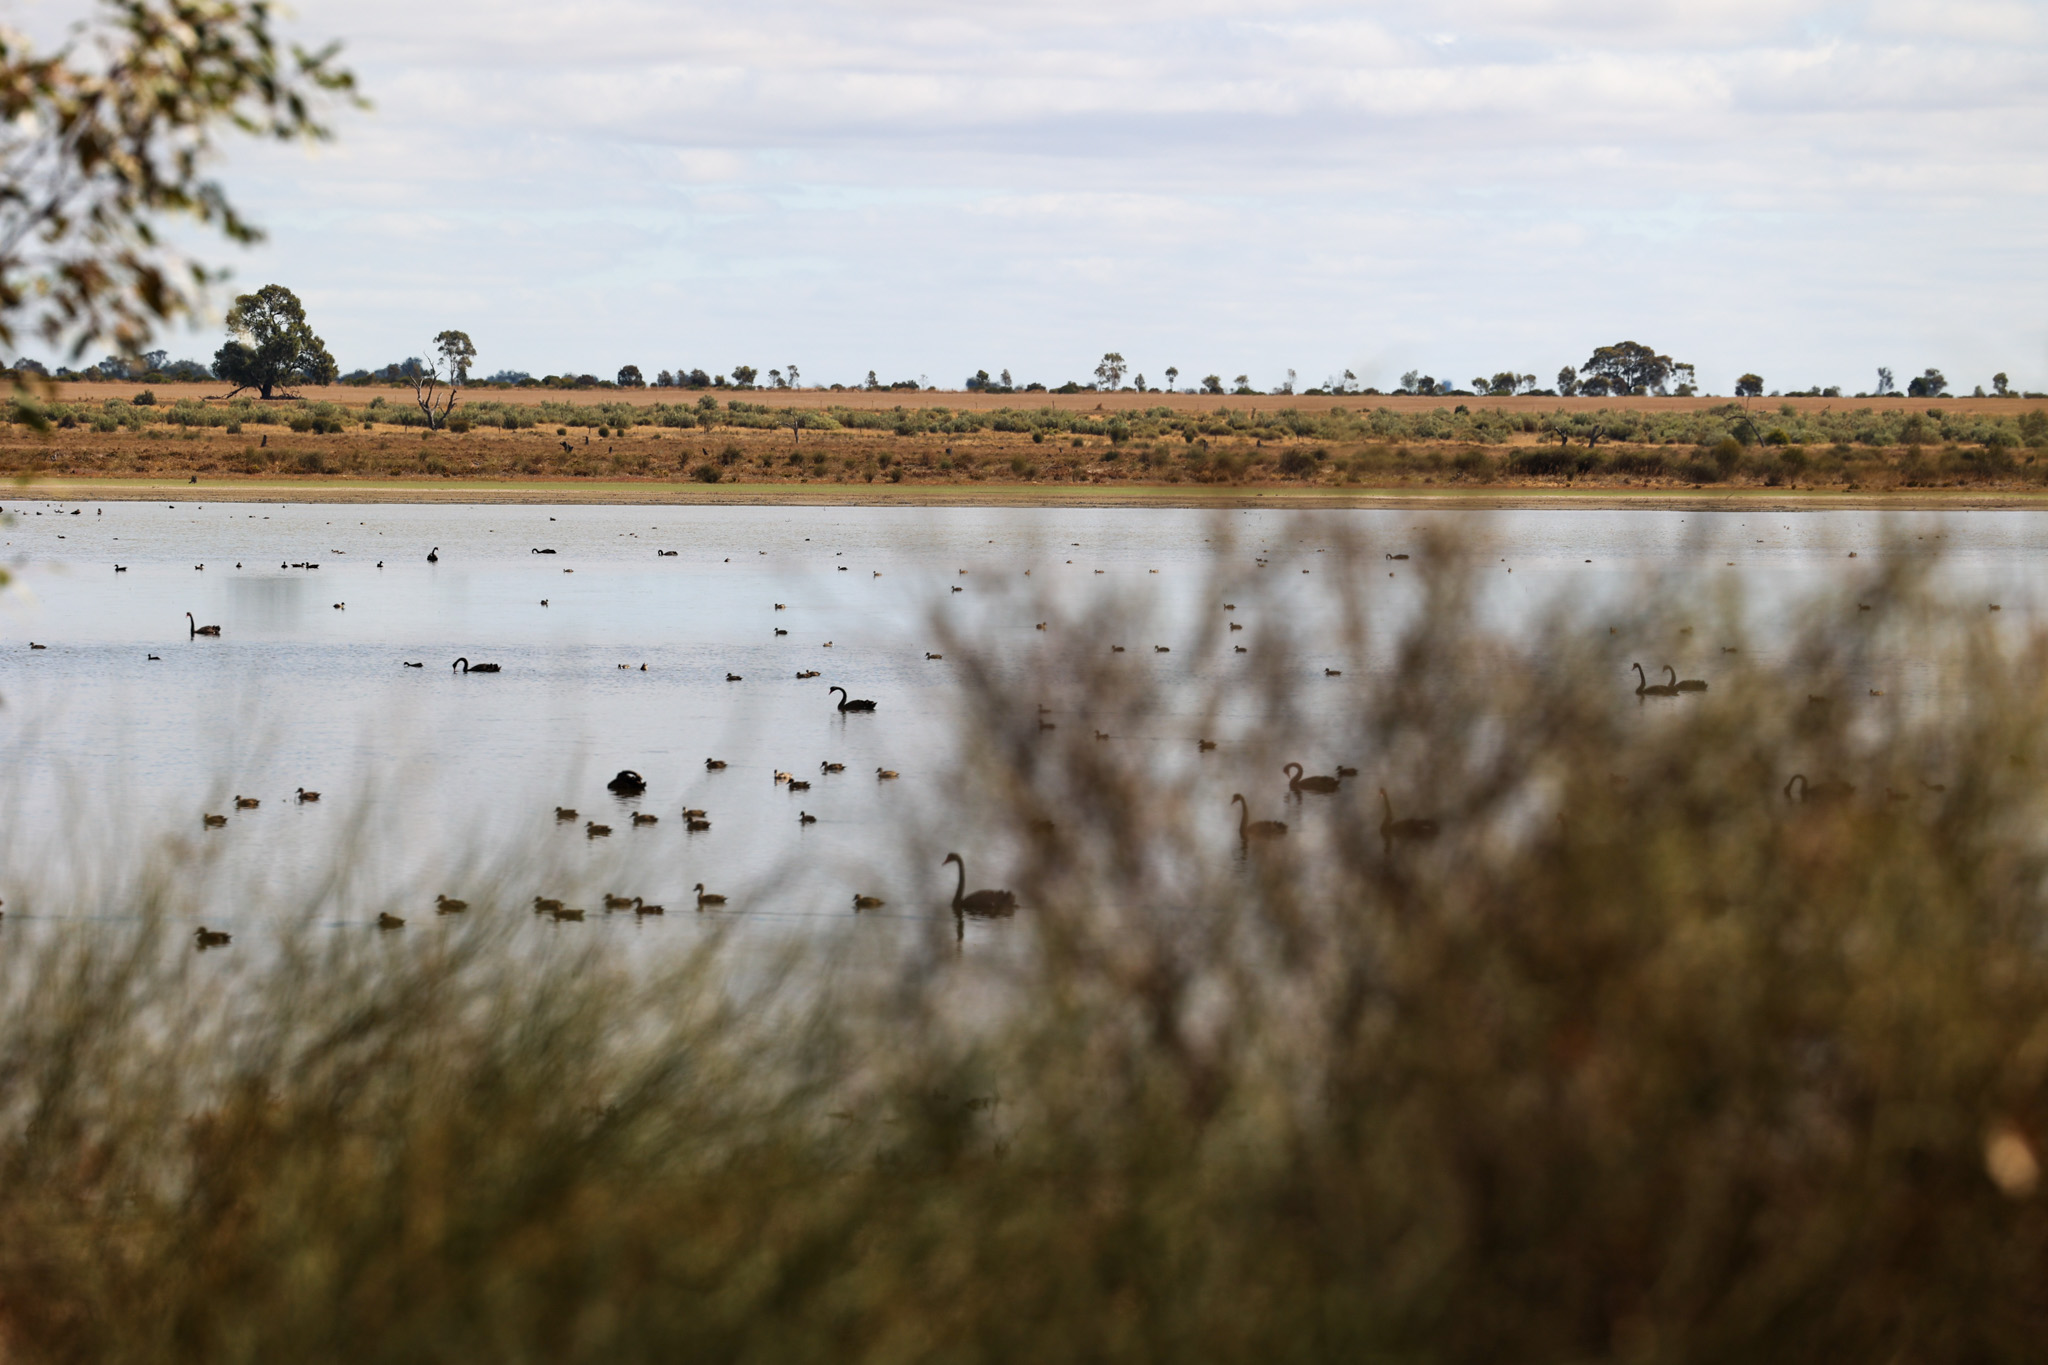 Ducks on the wetland.